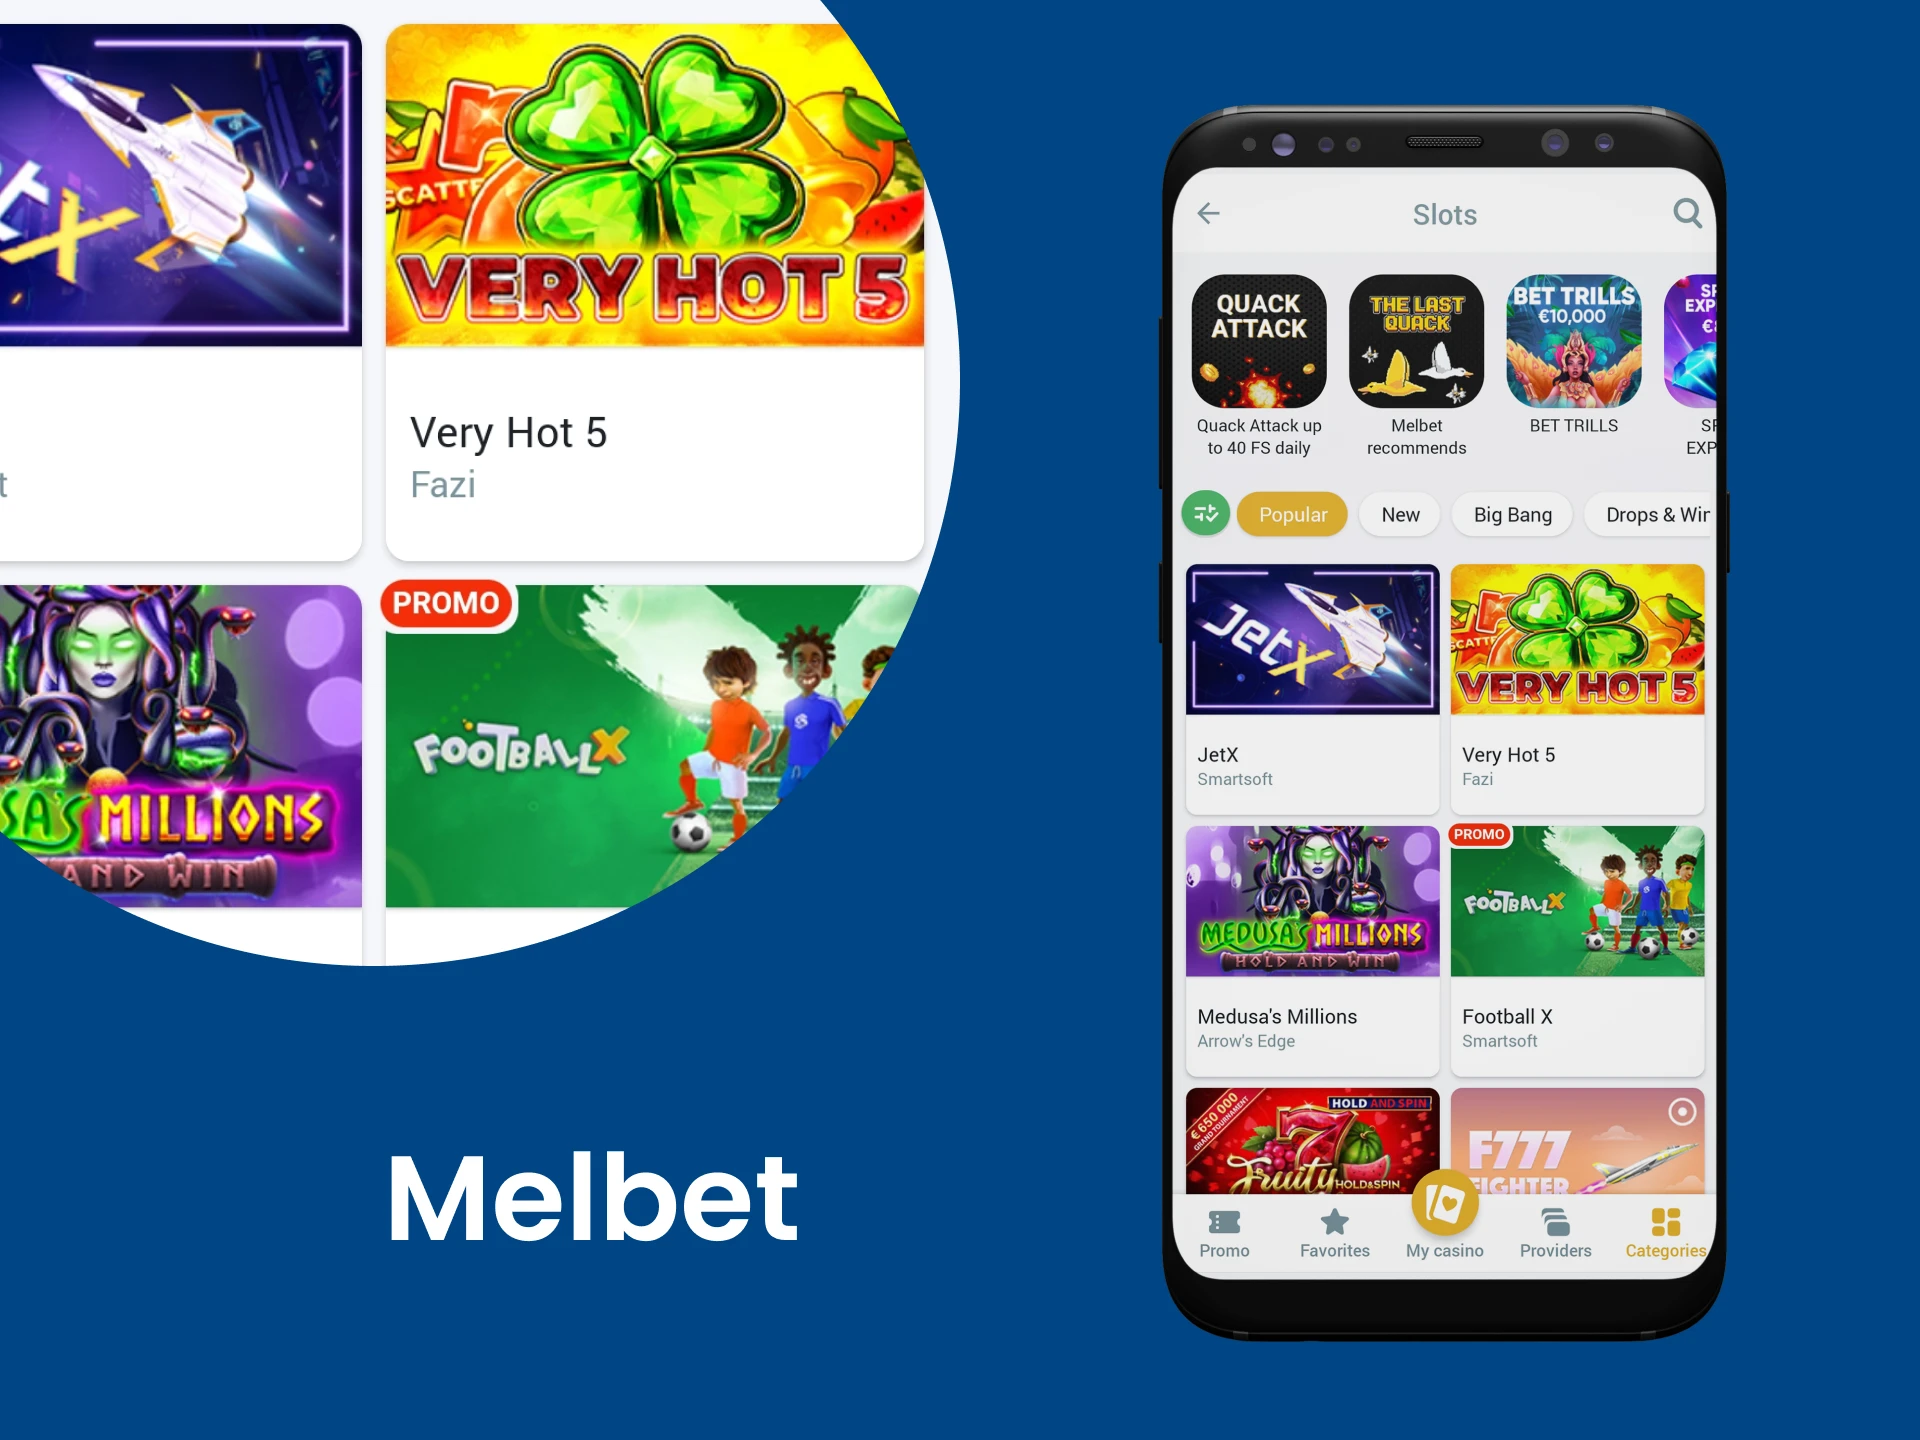 For casino games, choose Melbet.